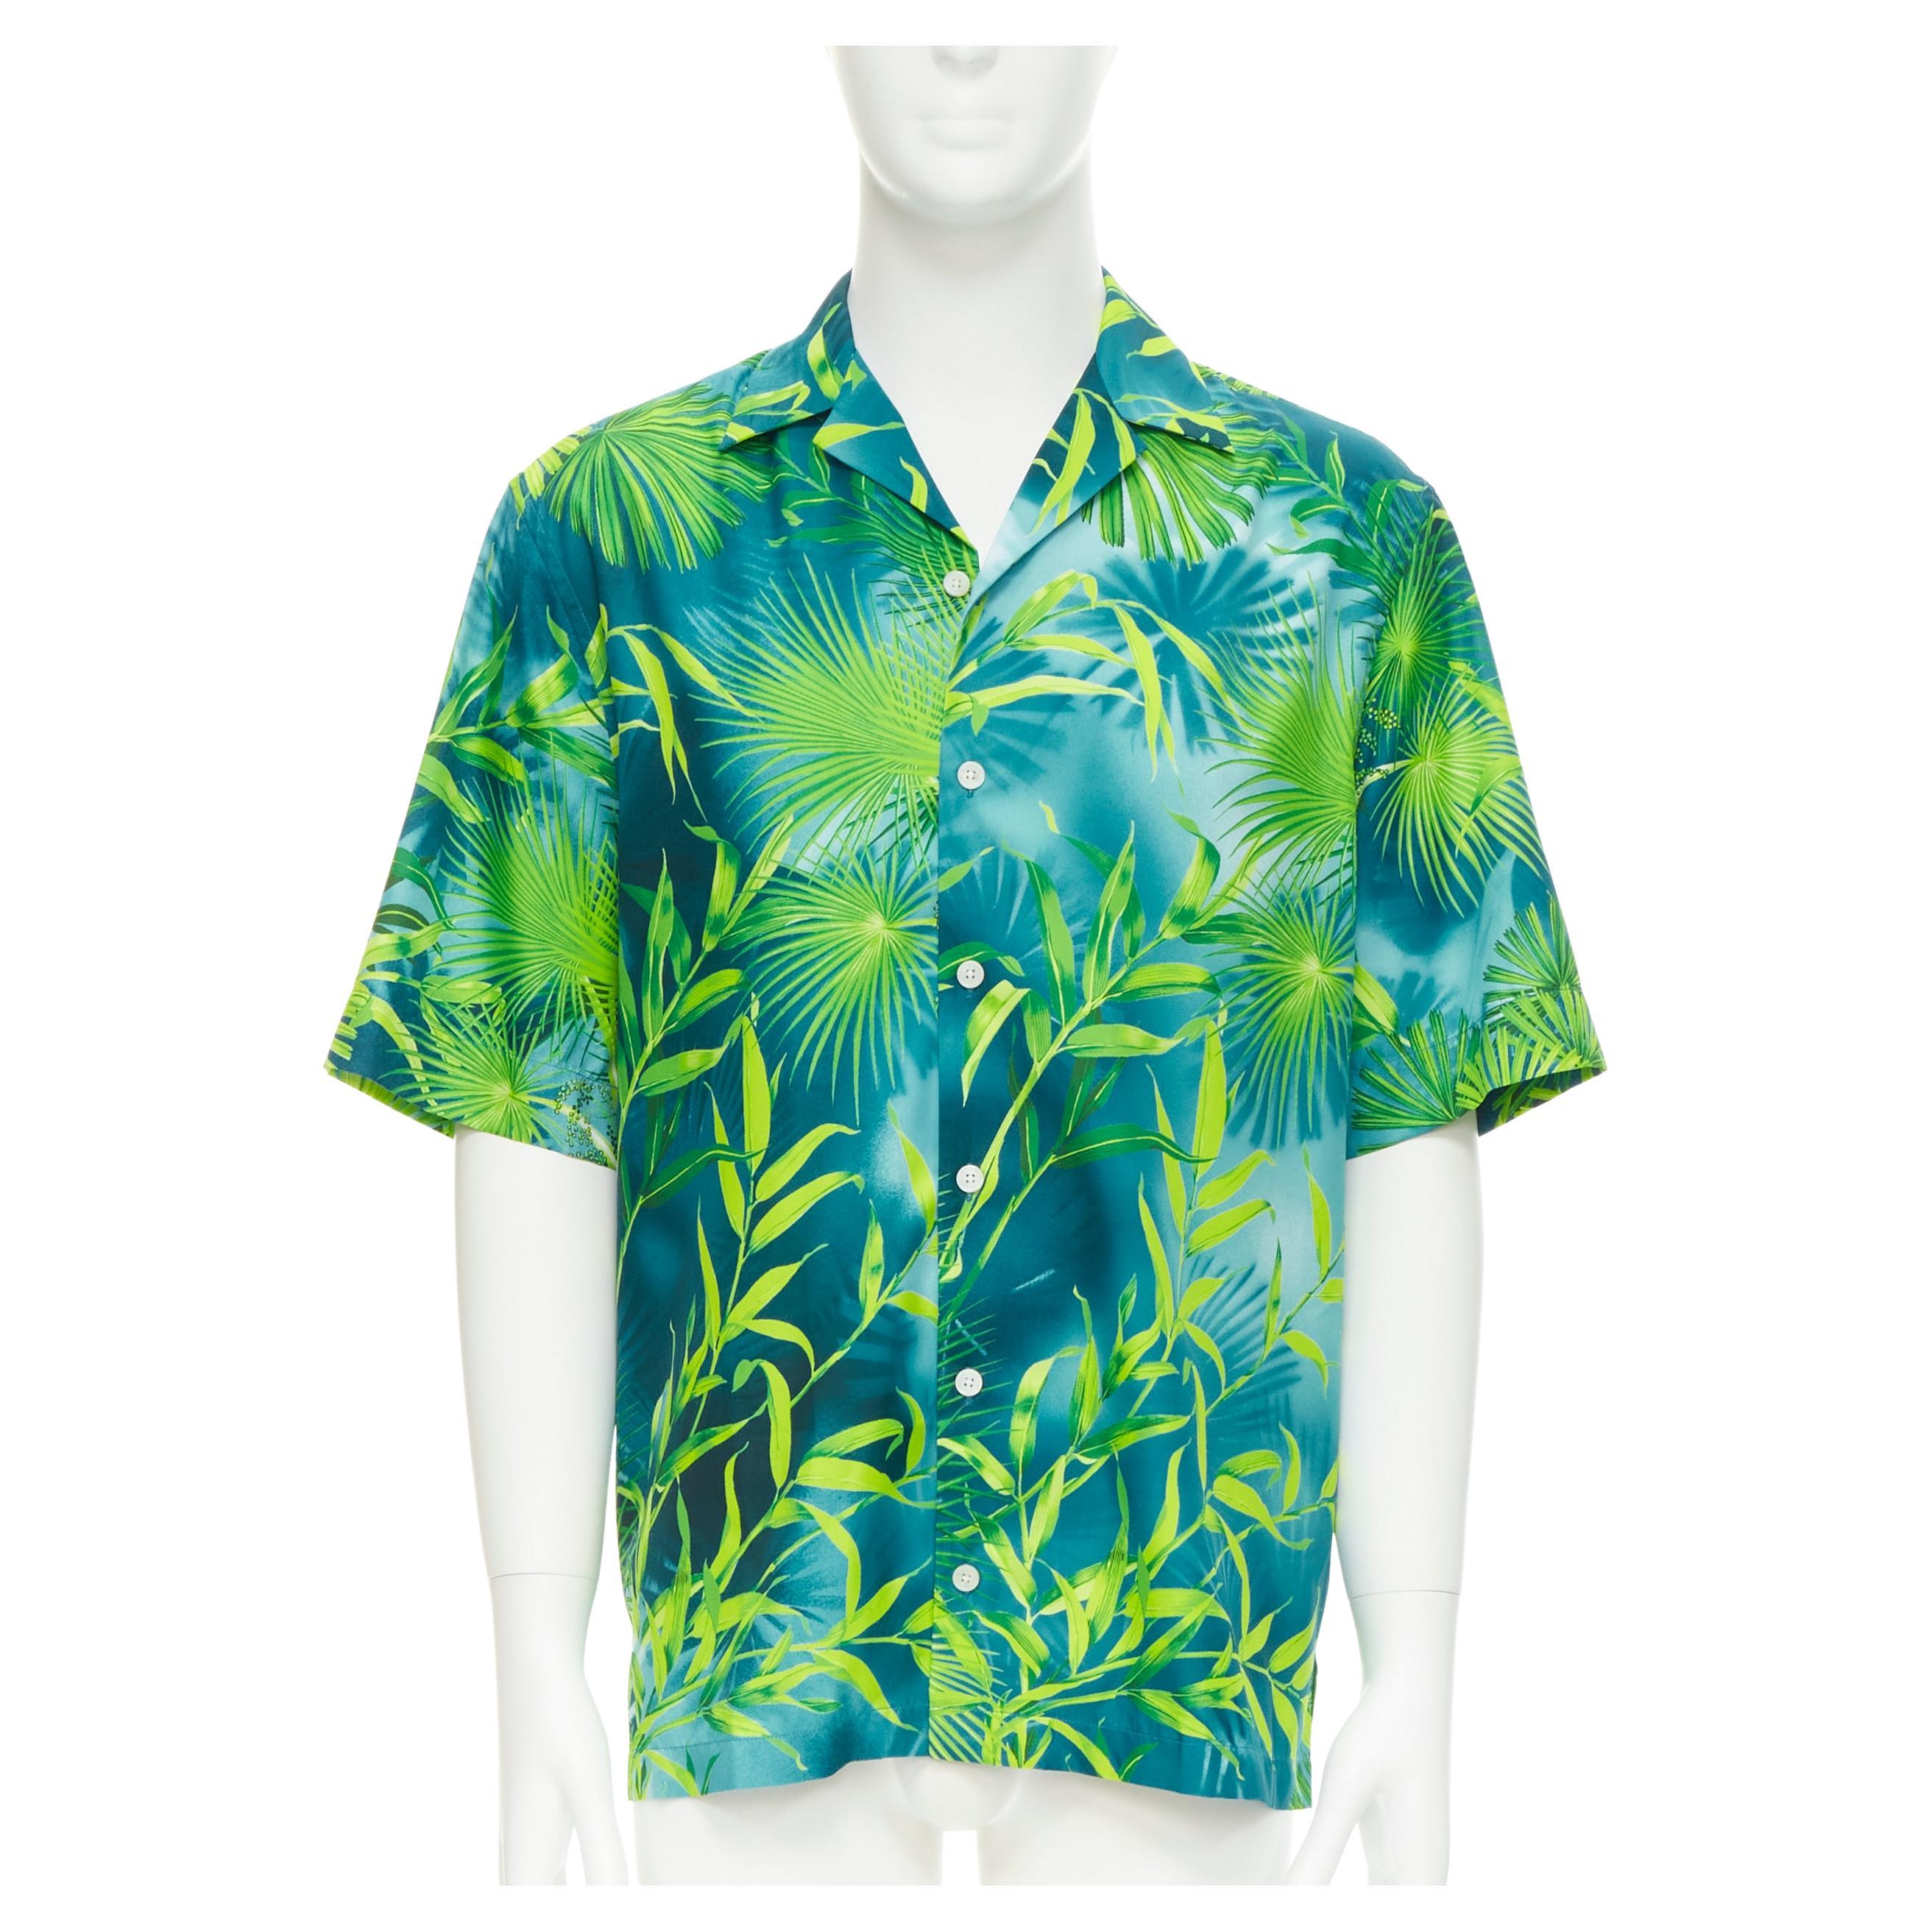 new VERSACE 2020 Iconic JLo Jungle print green tropical print shirt EU38 S